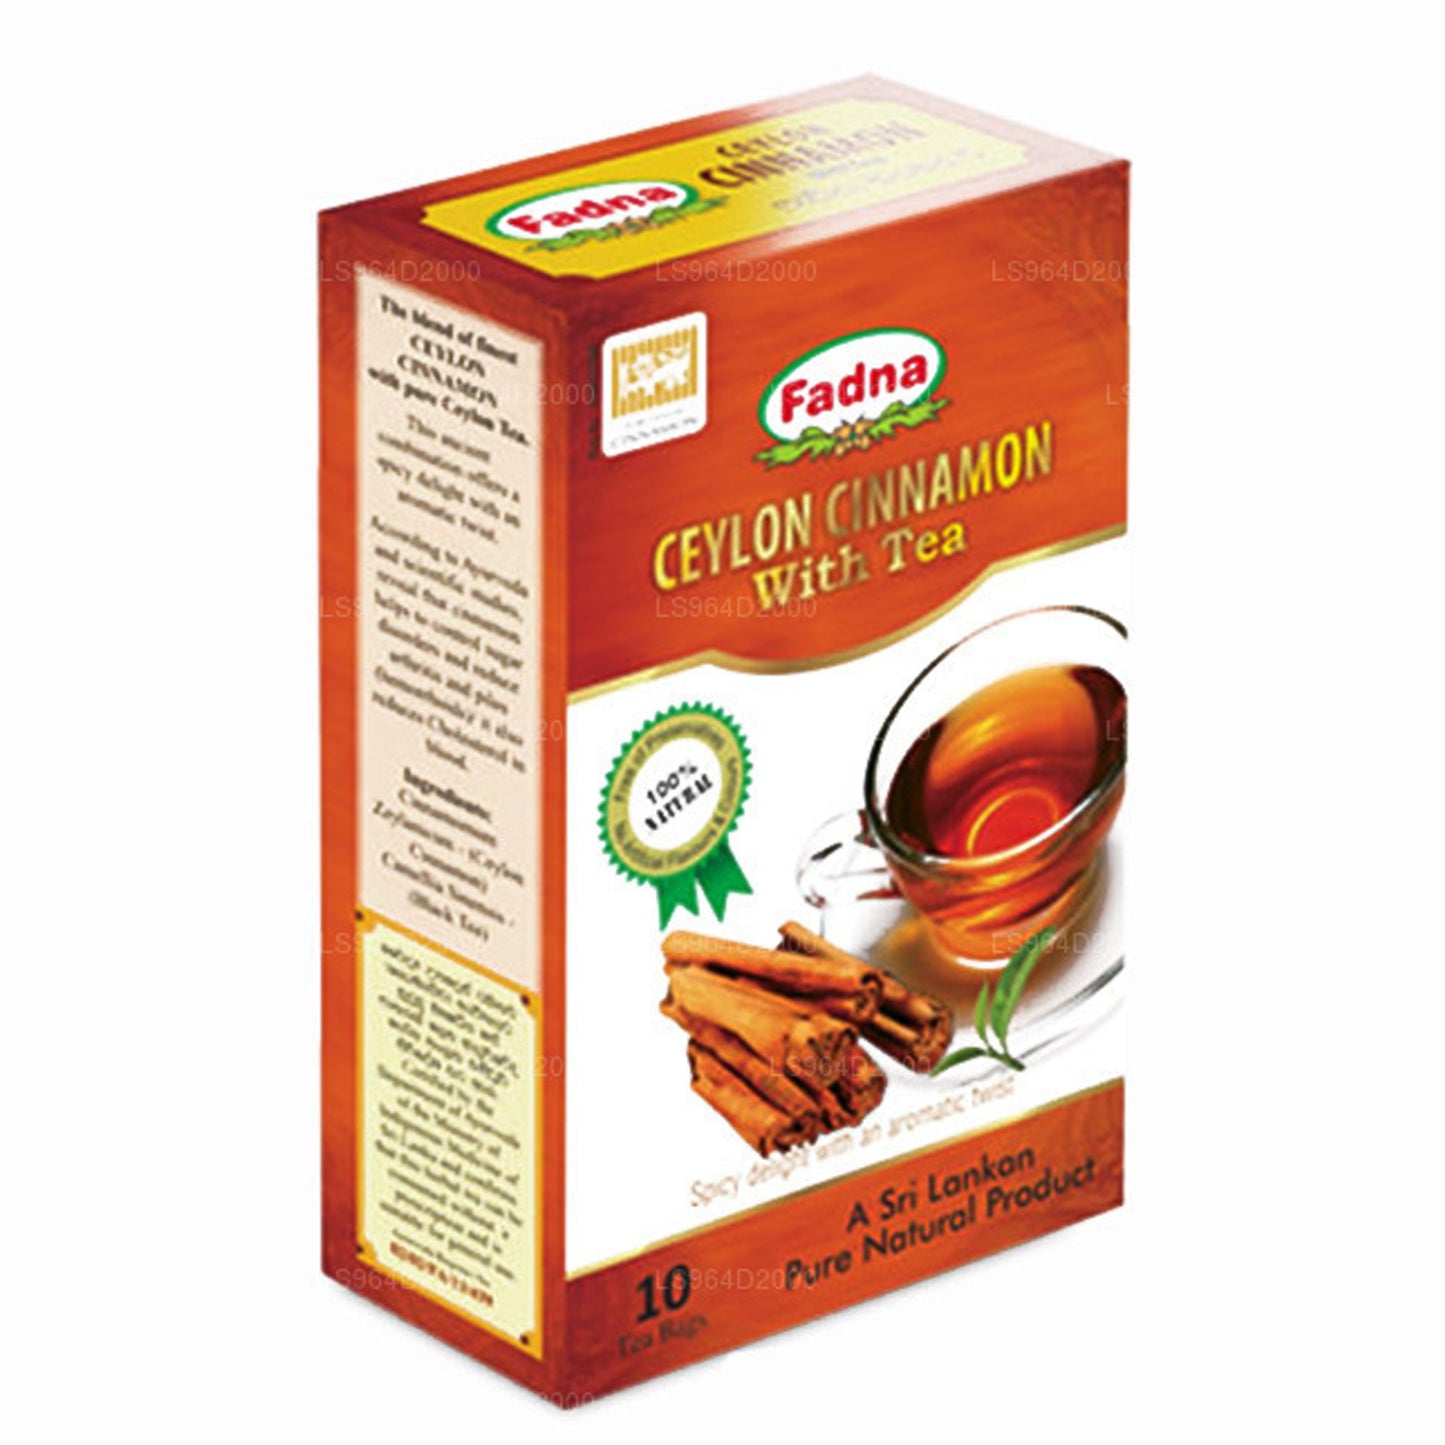 Fadna Ceylon Cinnamon Herbal Tea (20g) 10 Tea Bags